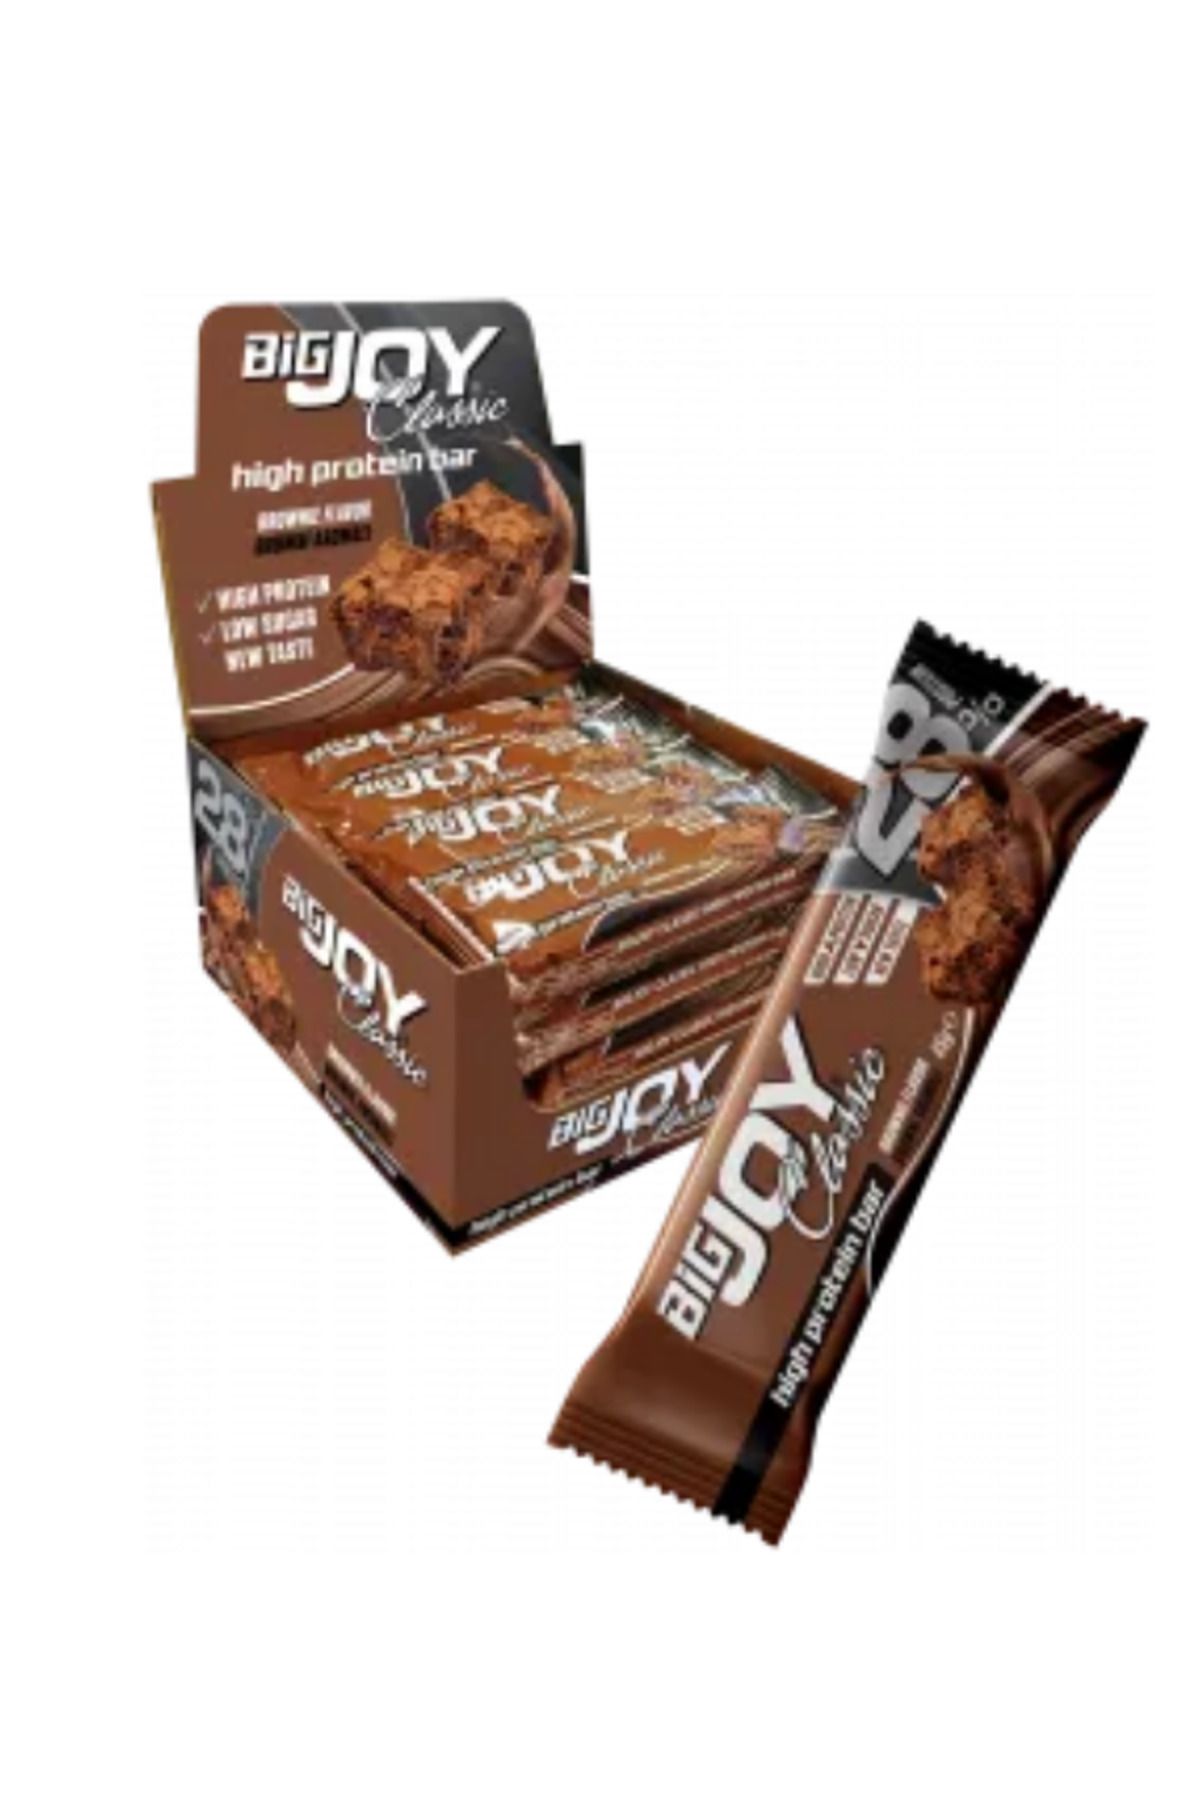 Big Joy Bigjoy Classic High Protein Bar Brownie 16 x 45g + Hediyeli